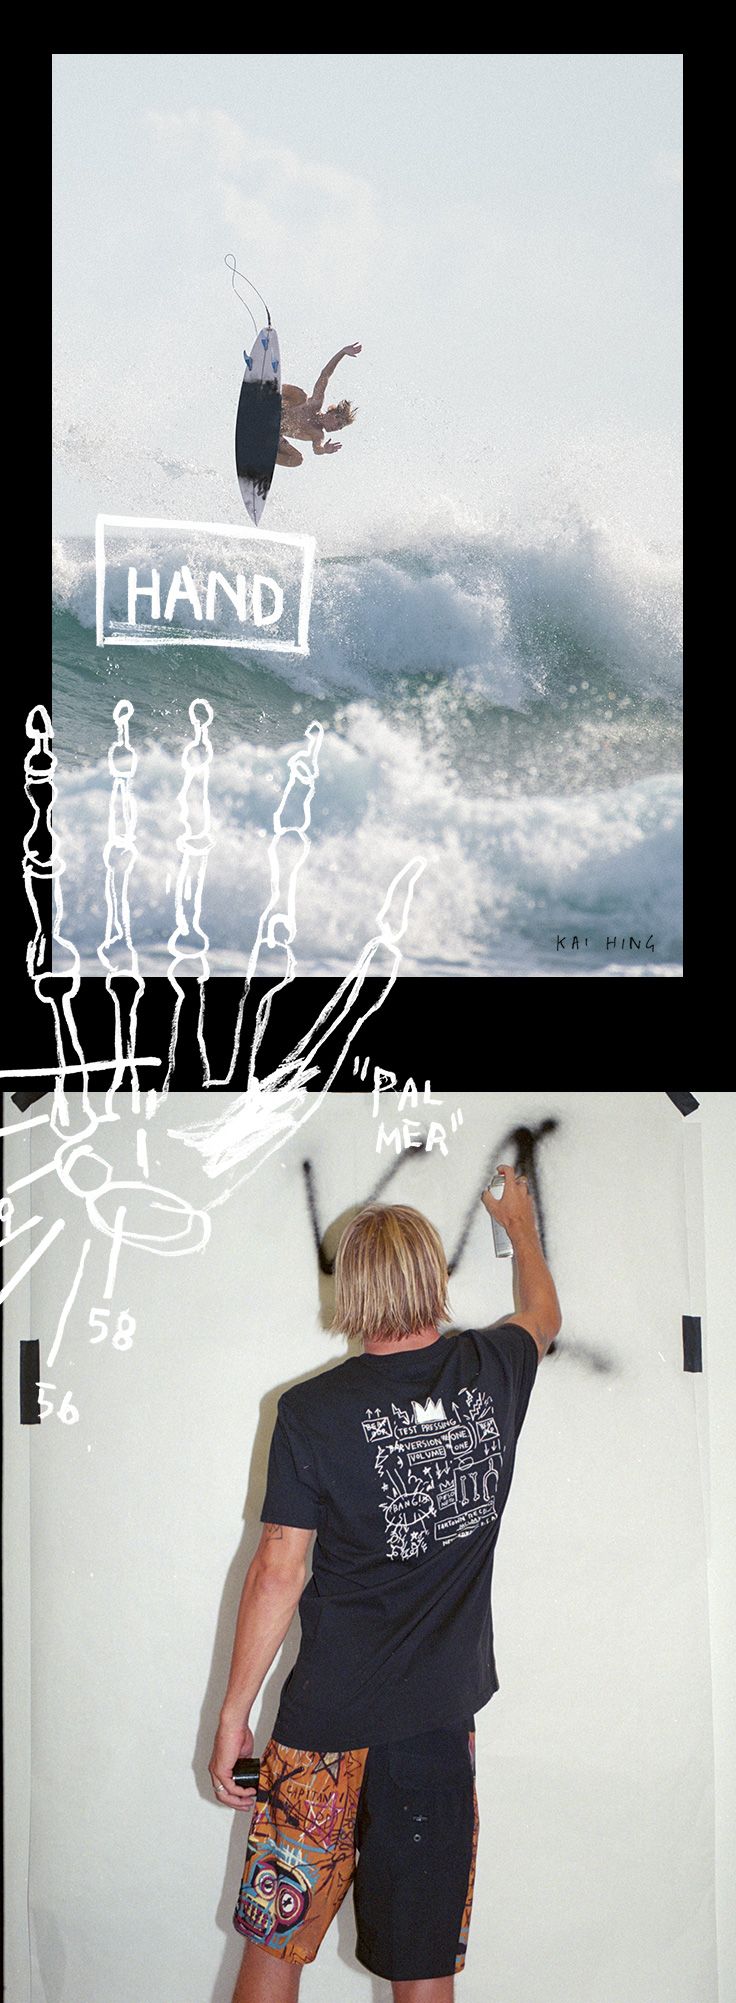 Billabong Surf 2019 | Jean-Michel Basquiat Surfing Apparel collection